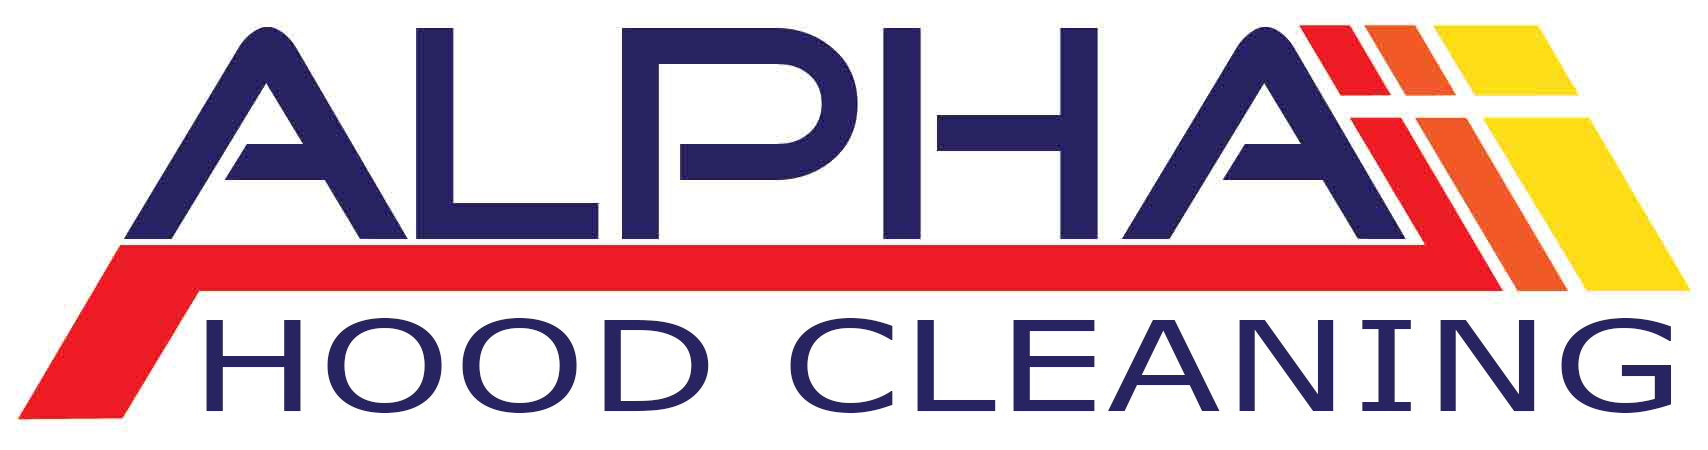 Alpha hood cleaning logo